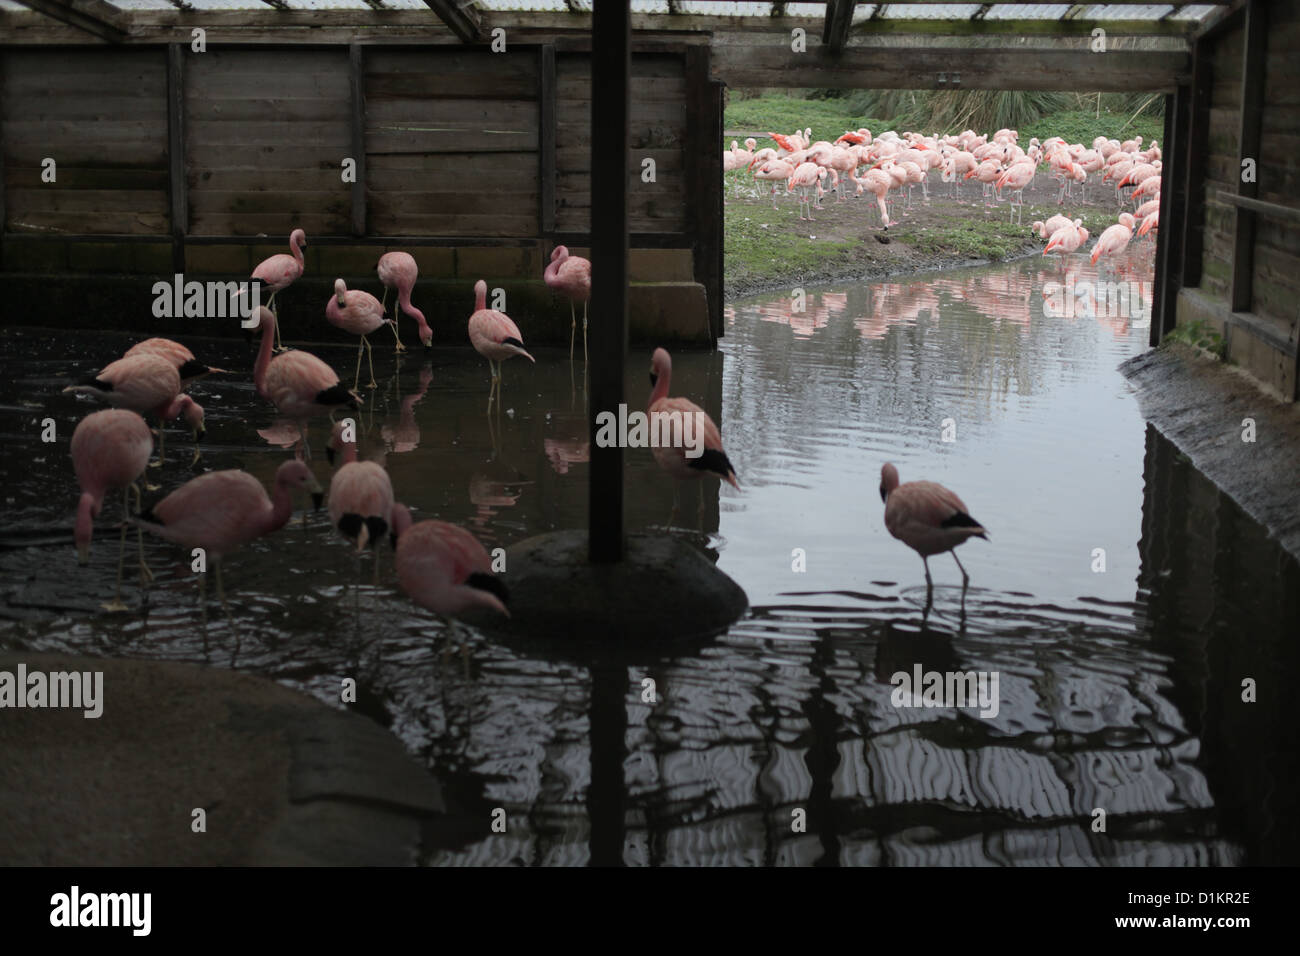 WWT Slimbridge Wetland Centre, Gloucestershire, UK. Pictured - flamingo in hut Stock Photo